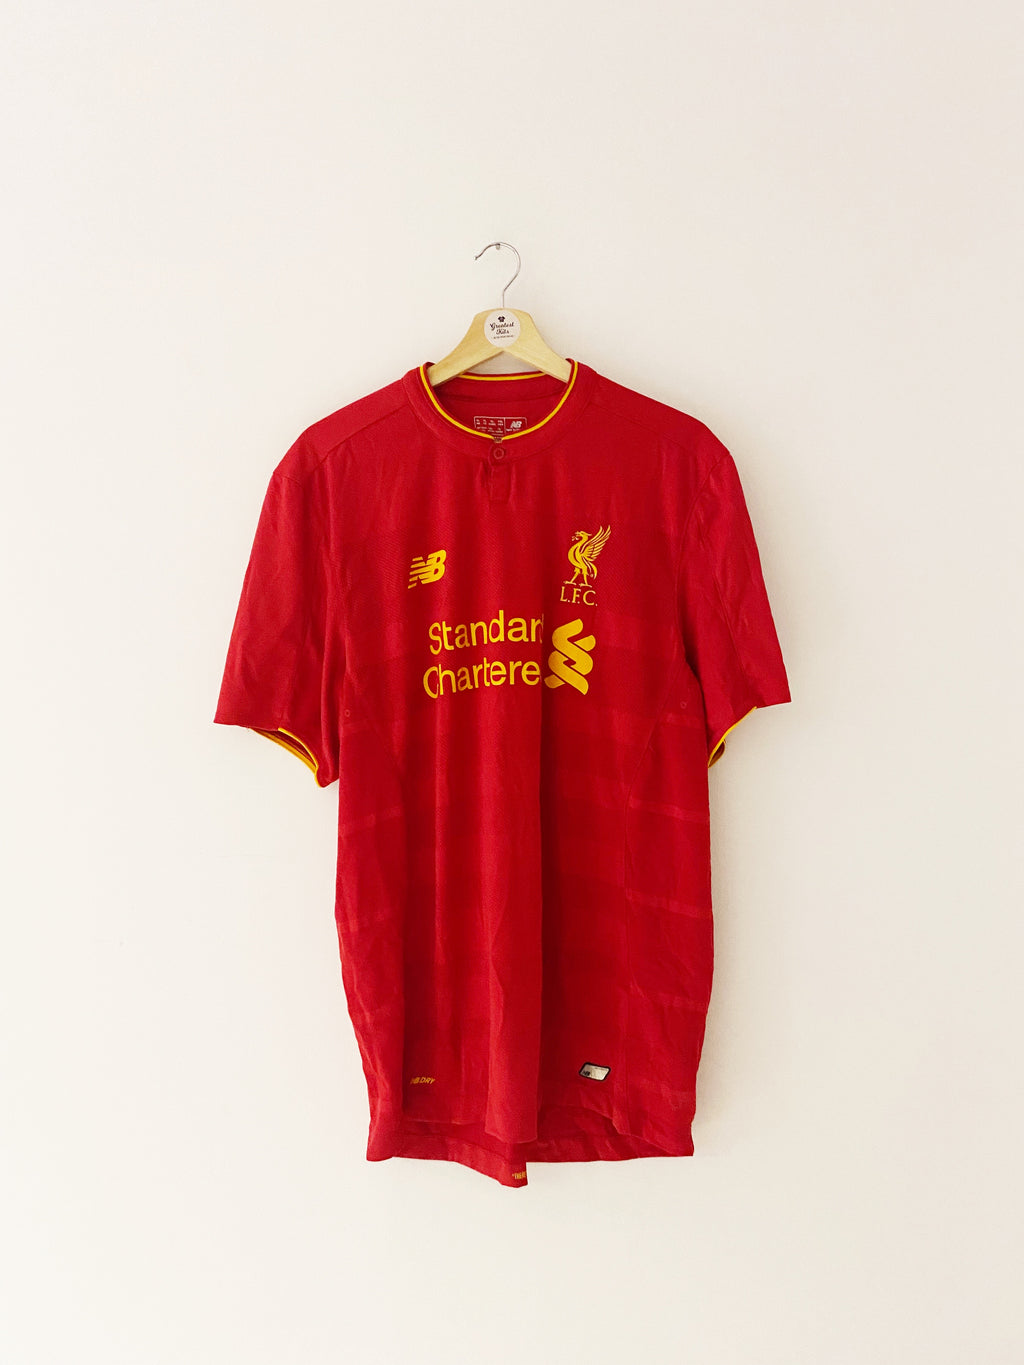 2016/17 Liverpool Home Shirt (XL) 9/10